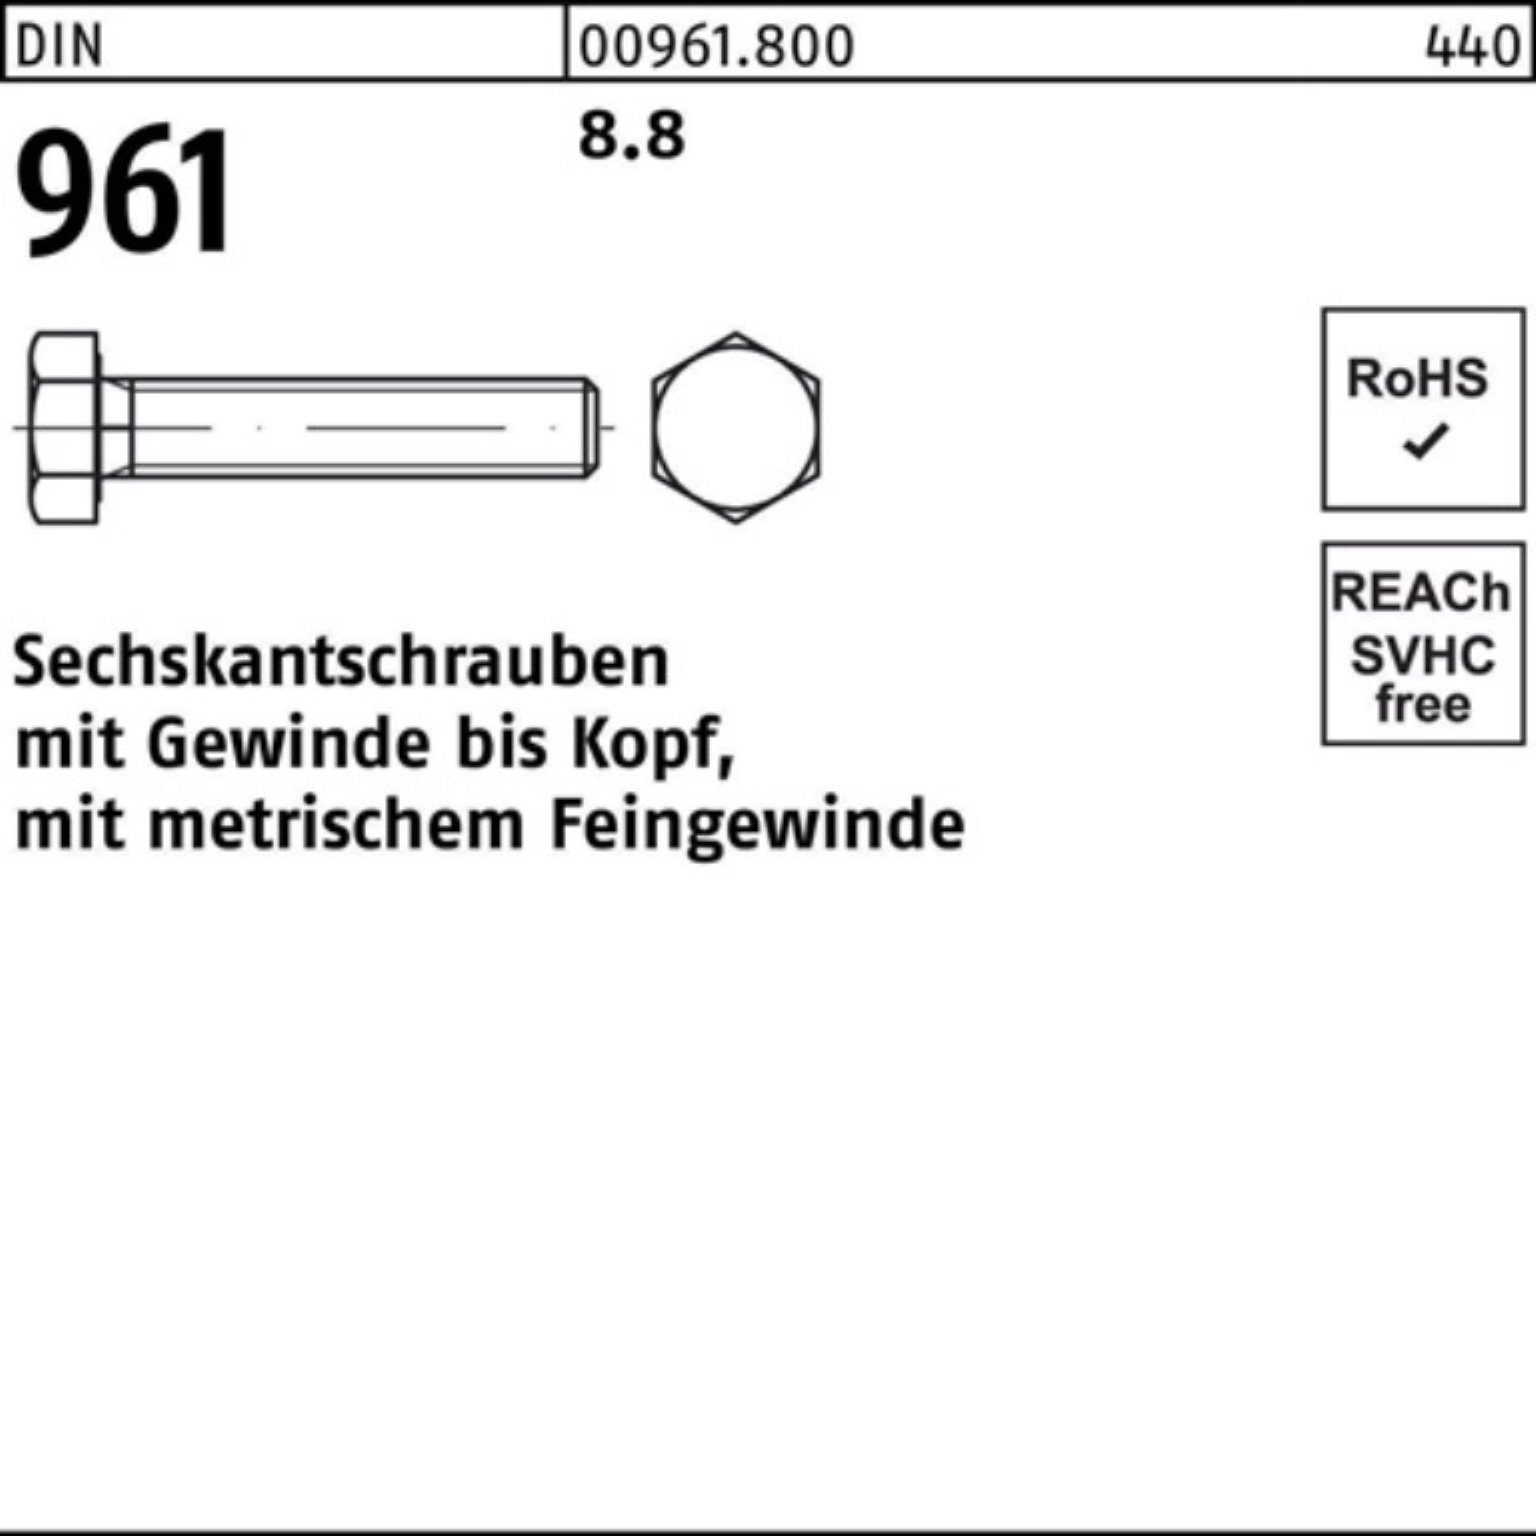 100er DIN 40 Reyher Sechskantschraube Sechskantschraube DI Pack M10x1,25x 961 Stück VG 100 8.8